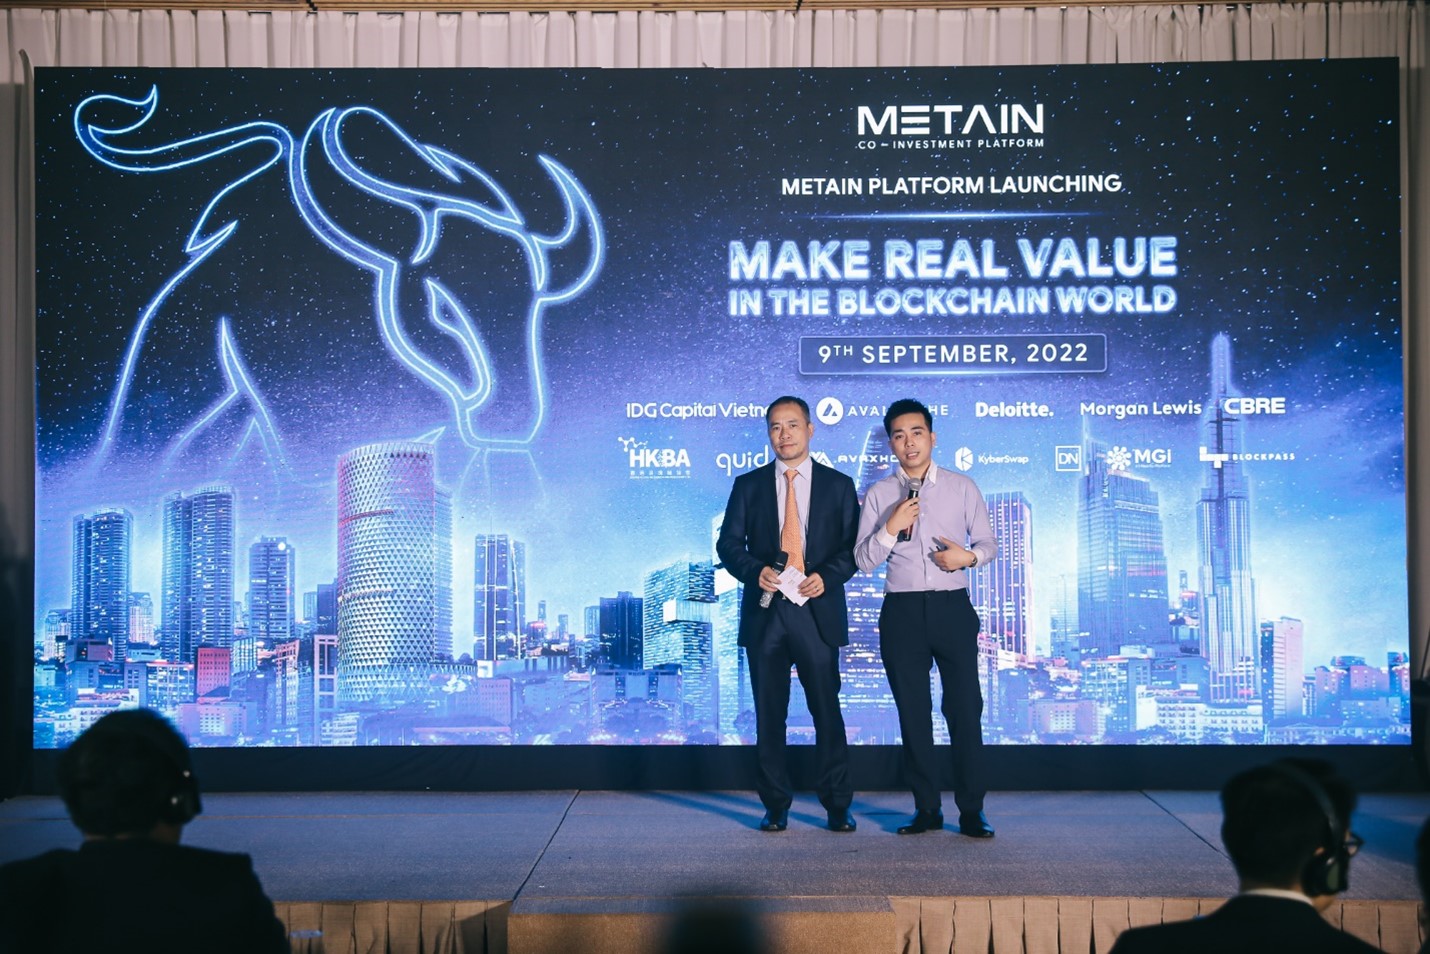 Mr. Duc Tran - IDG Capital Vietnam & Mr. Nhan Tran - CEO of Metain